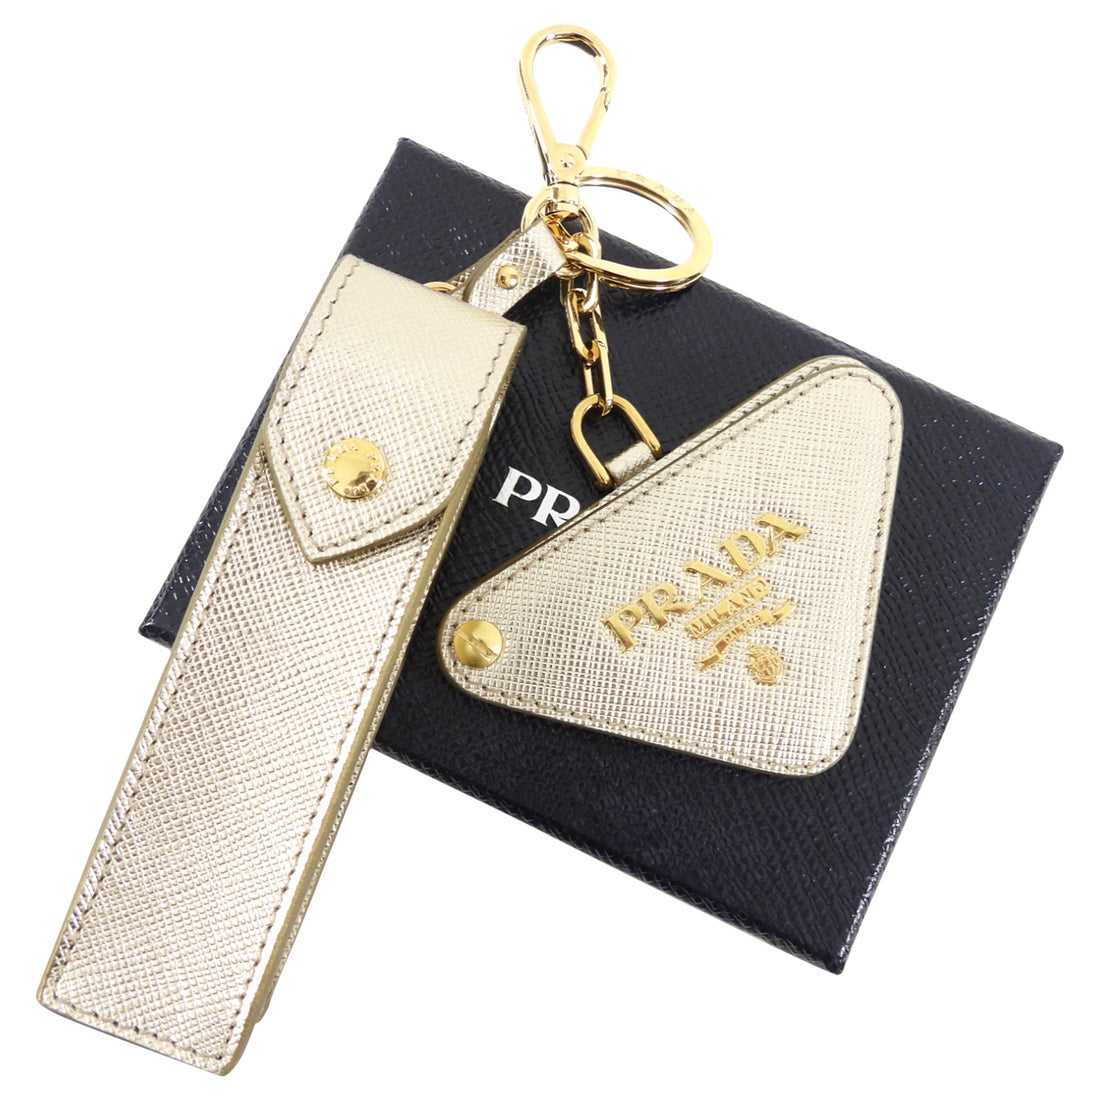 Prada Gold Saffiano Leather Bag Charm / Key Ring / Lipstick Holder